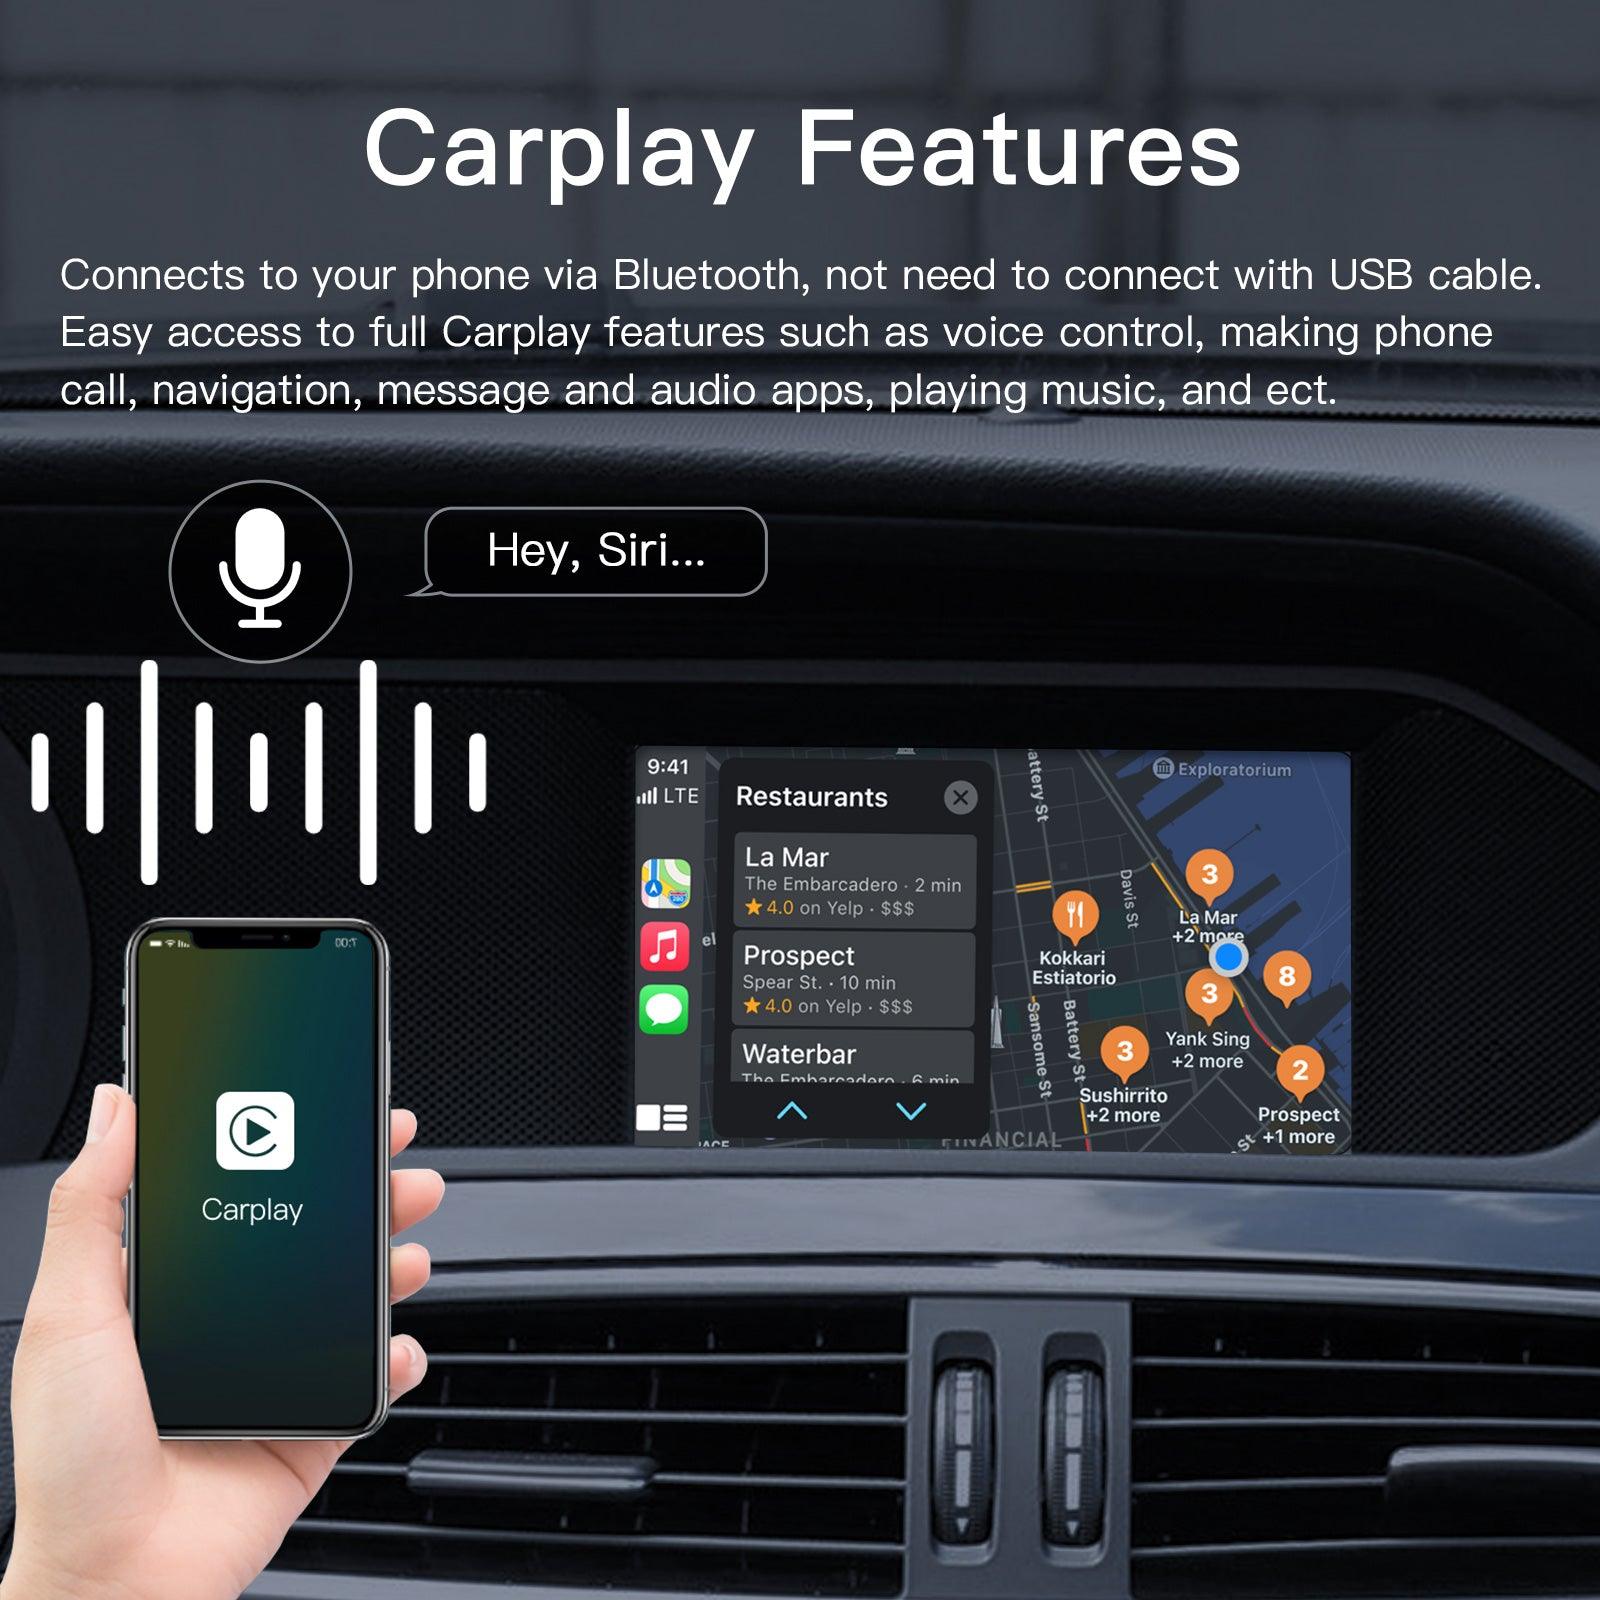 GABITECH Drahtlos CarPlay Android Auto Für Mercedes Benz A B C CLA GLK ML E  SLK Einbau-Navigationsgerät